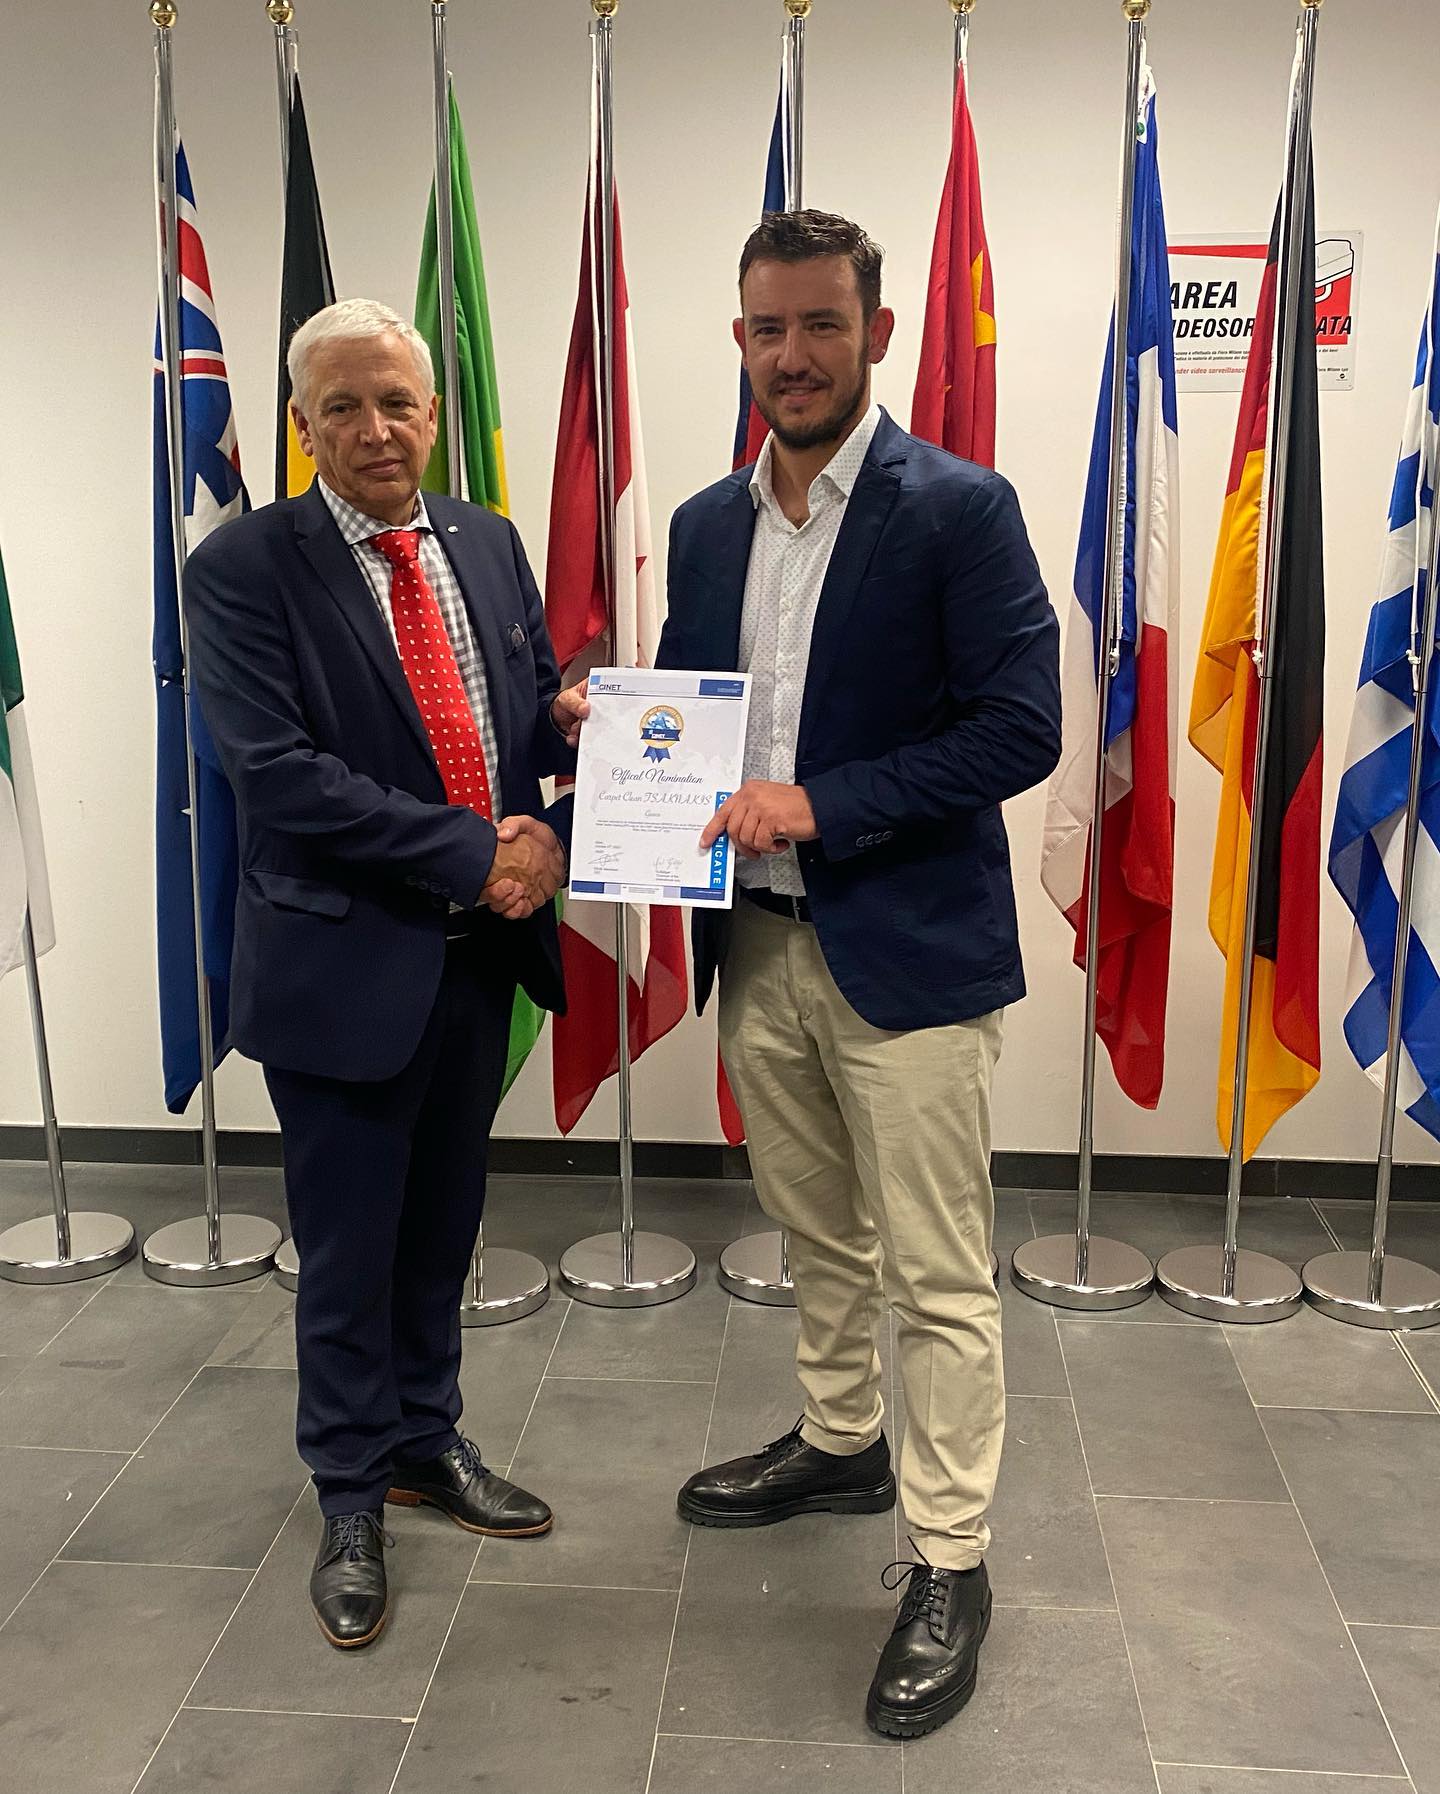 Carpet Clean Tsaknakis Wins The Greek Overall RTC Awards 2022